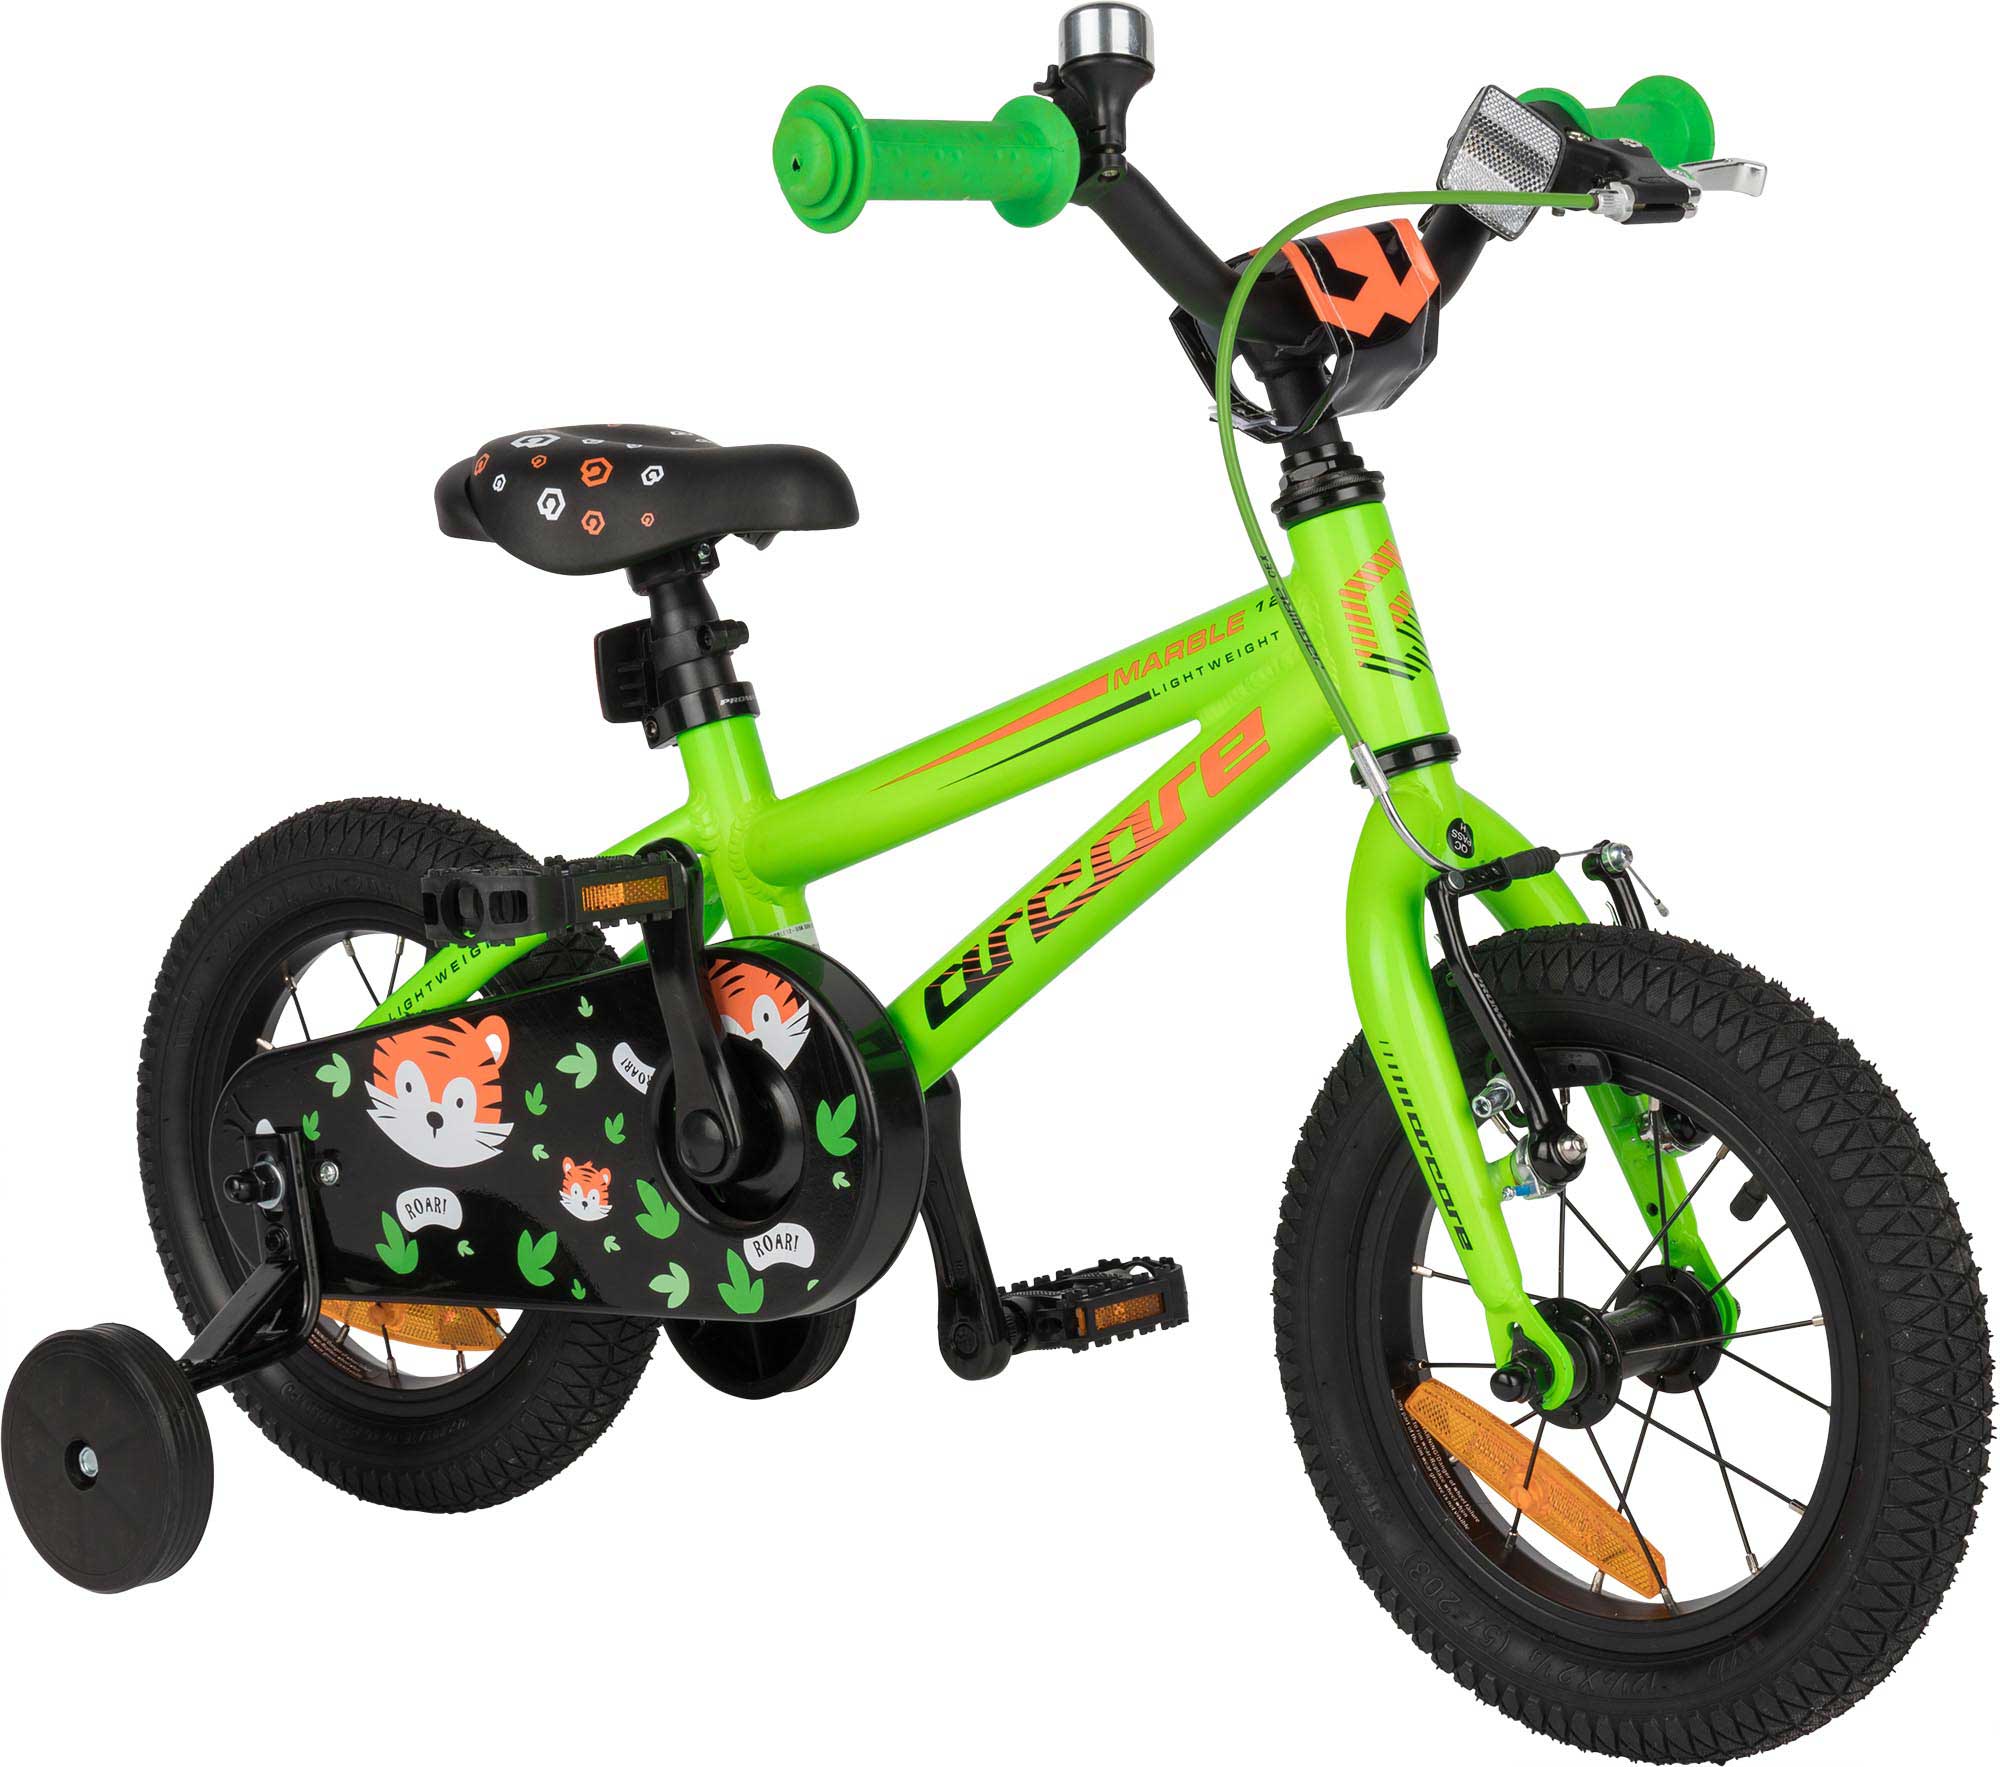 Kids’ 12” bicycle